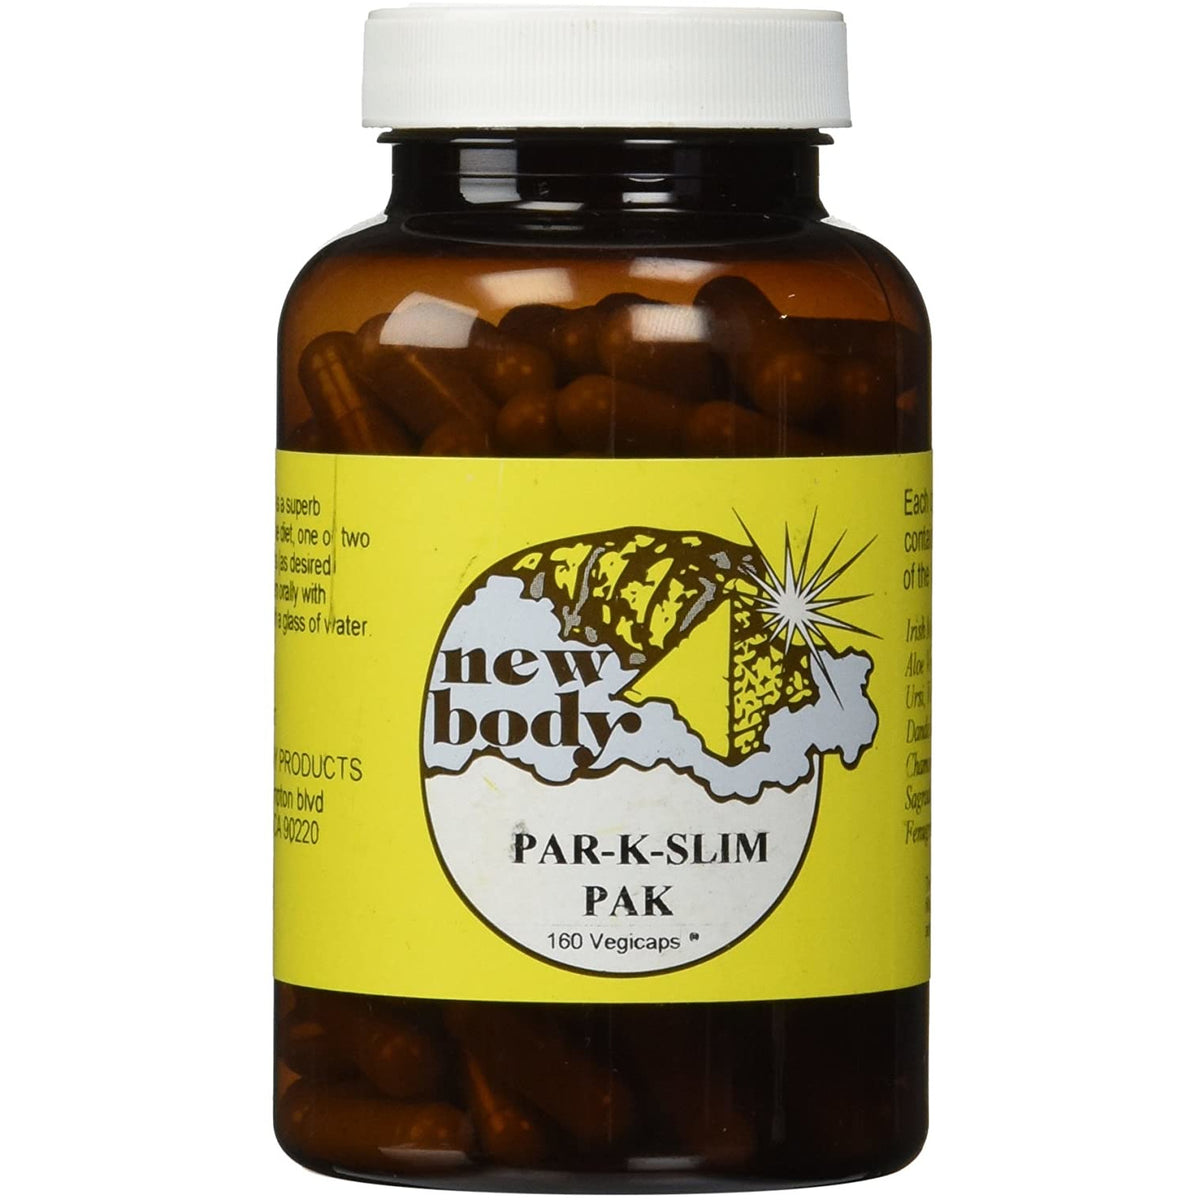 Aanpassingsvermogen Prestatie Kind PAR-K-SLIM PAK – Essential Body Herbs, Inc